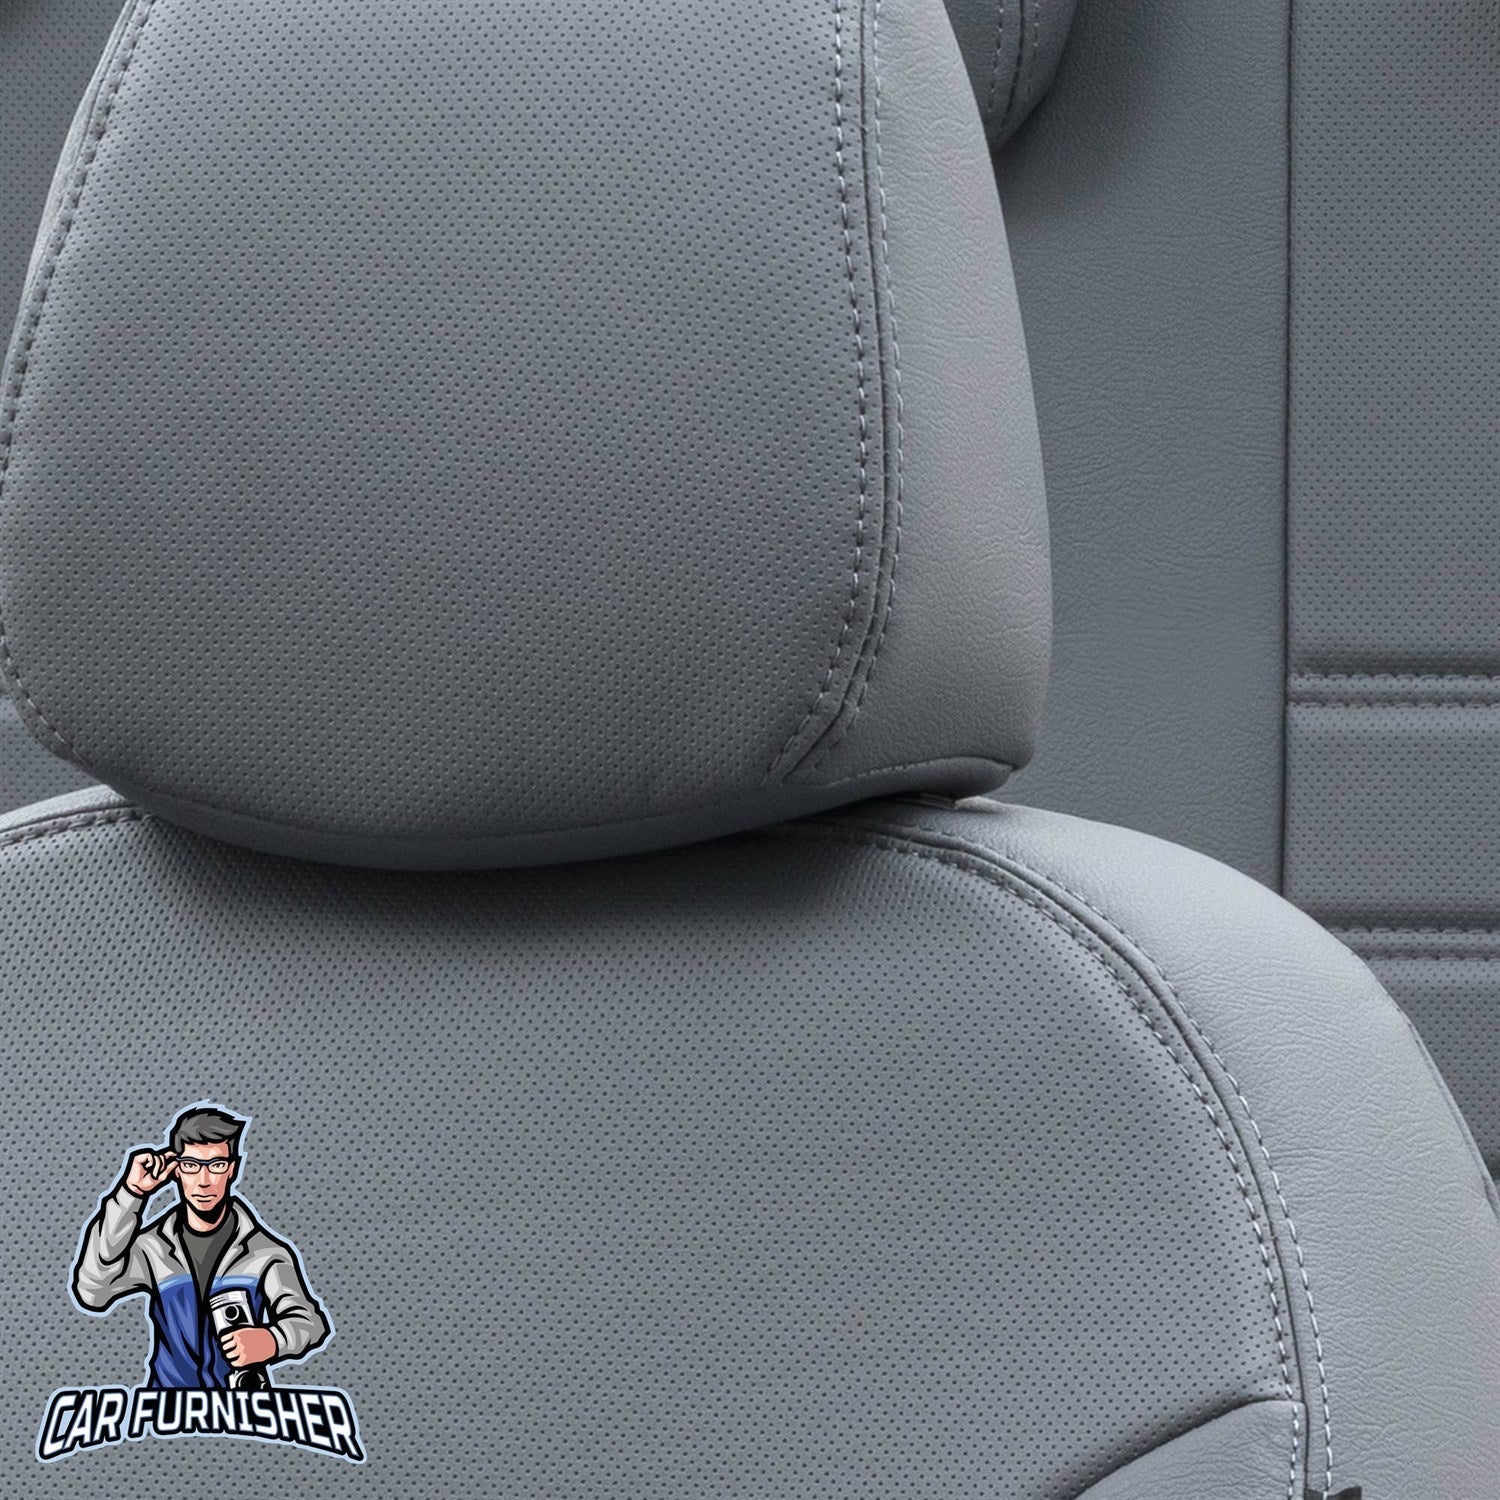 Hyundai Matrix Seat Covers Istanbul Leather Design Smoked Leather